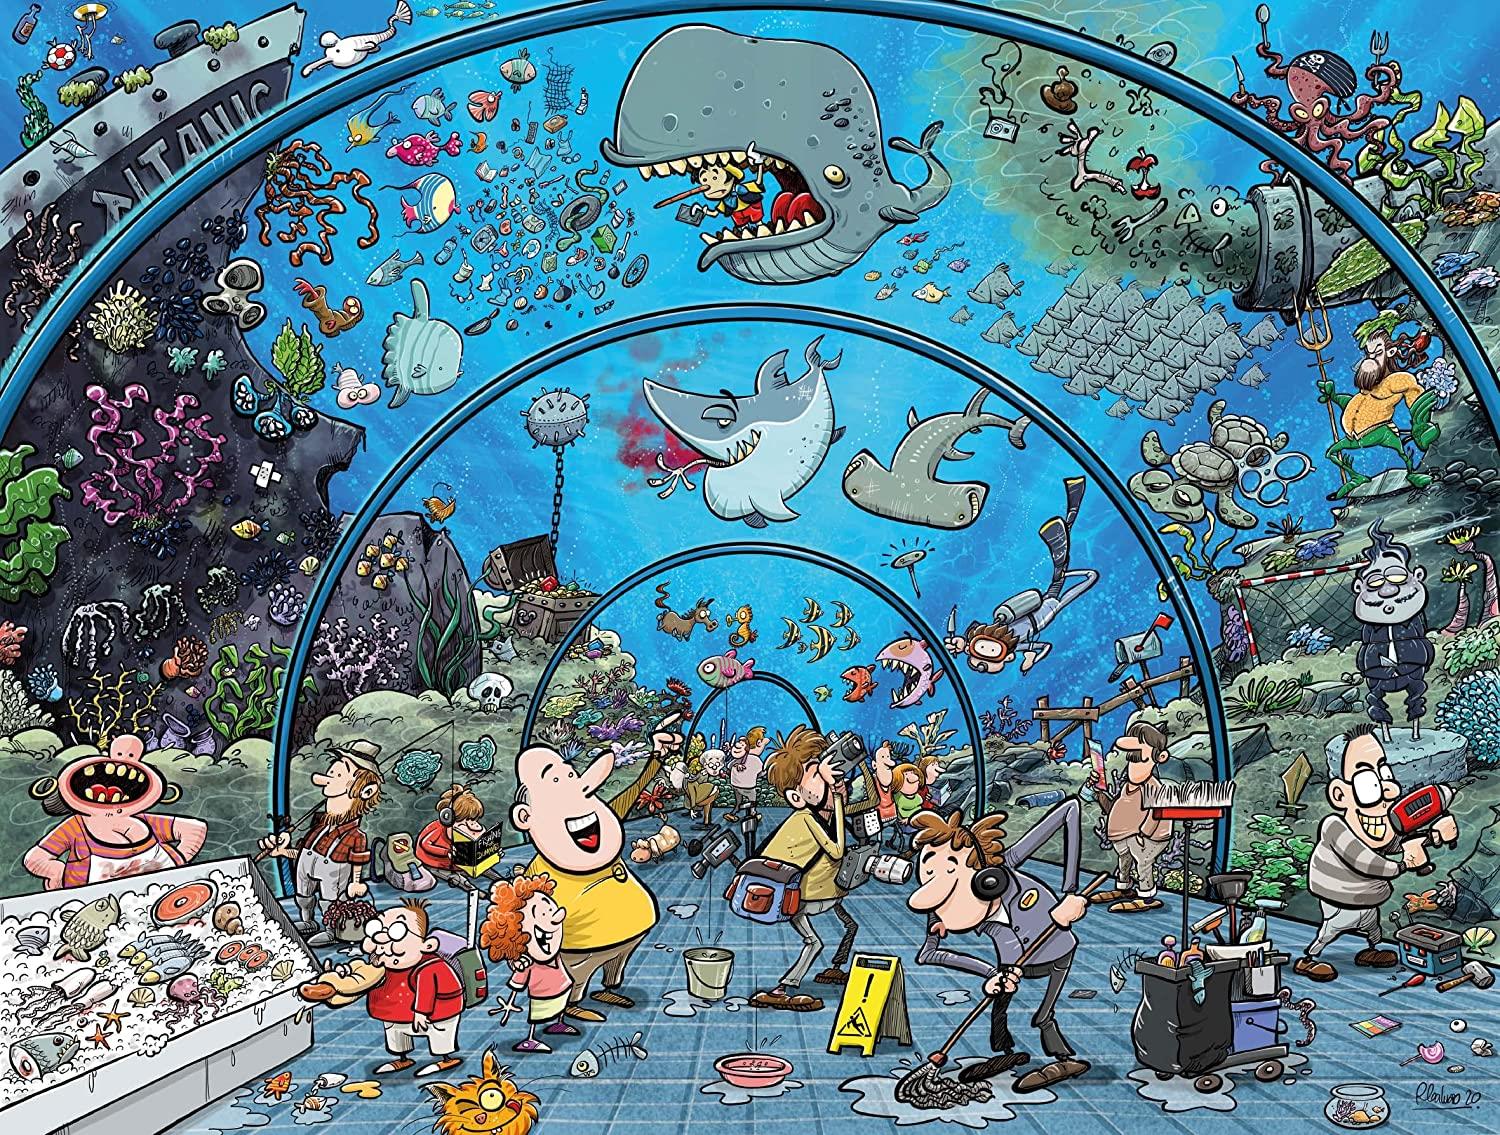 Chaos at the Aquarium - Chaos no. 12 Jigsaw Puzzle (500 Pieces)